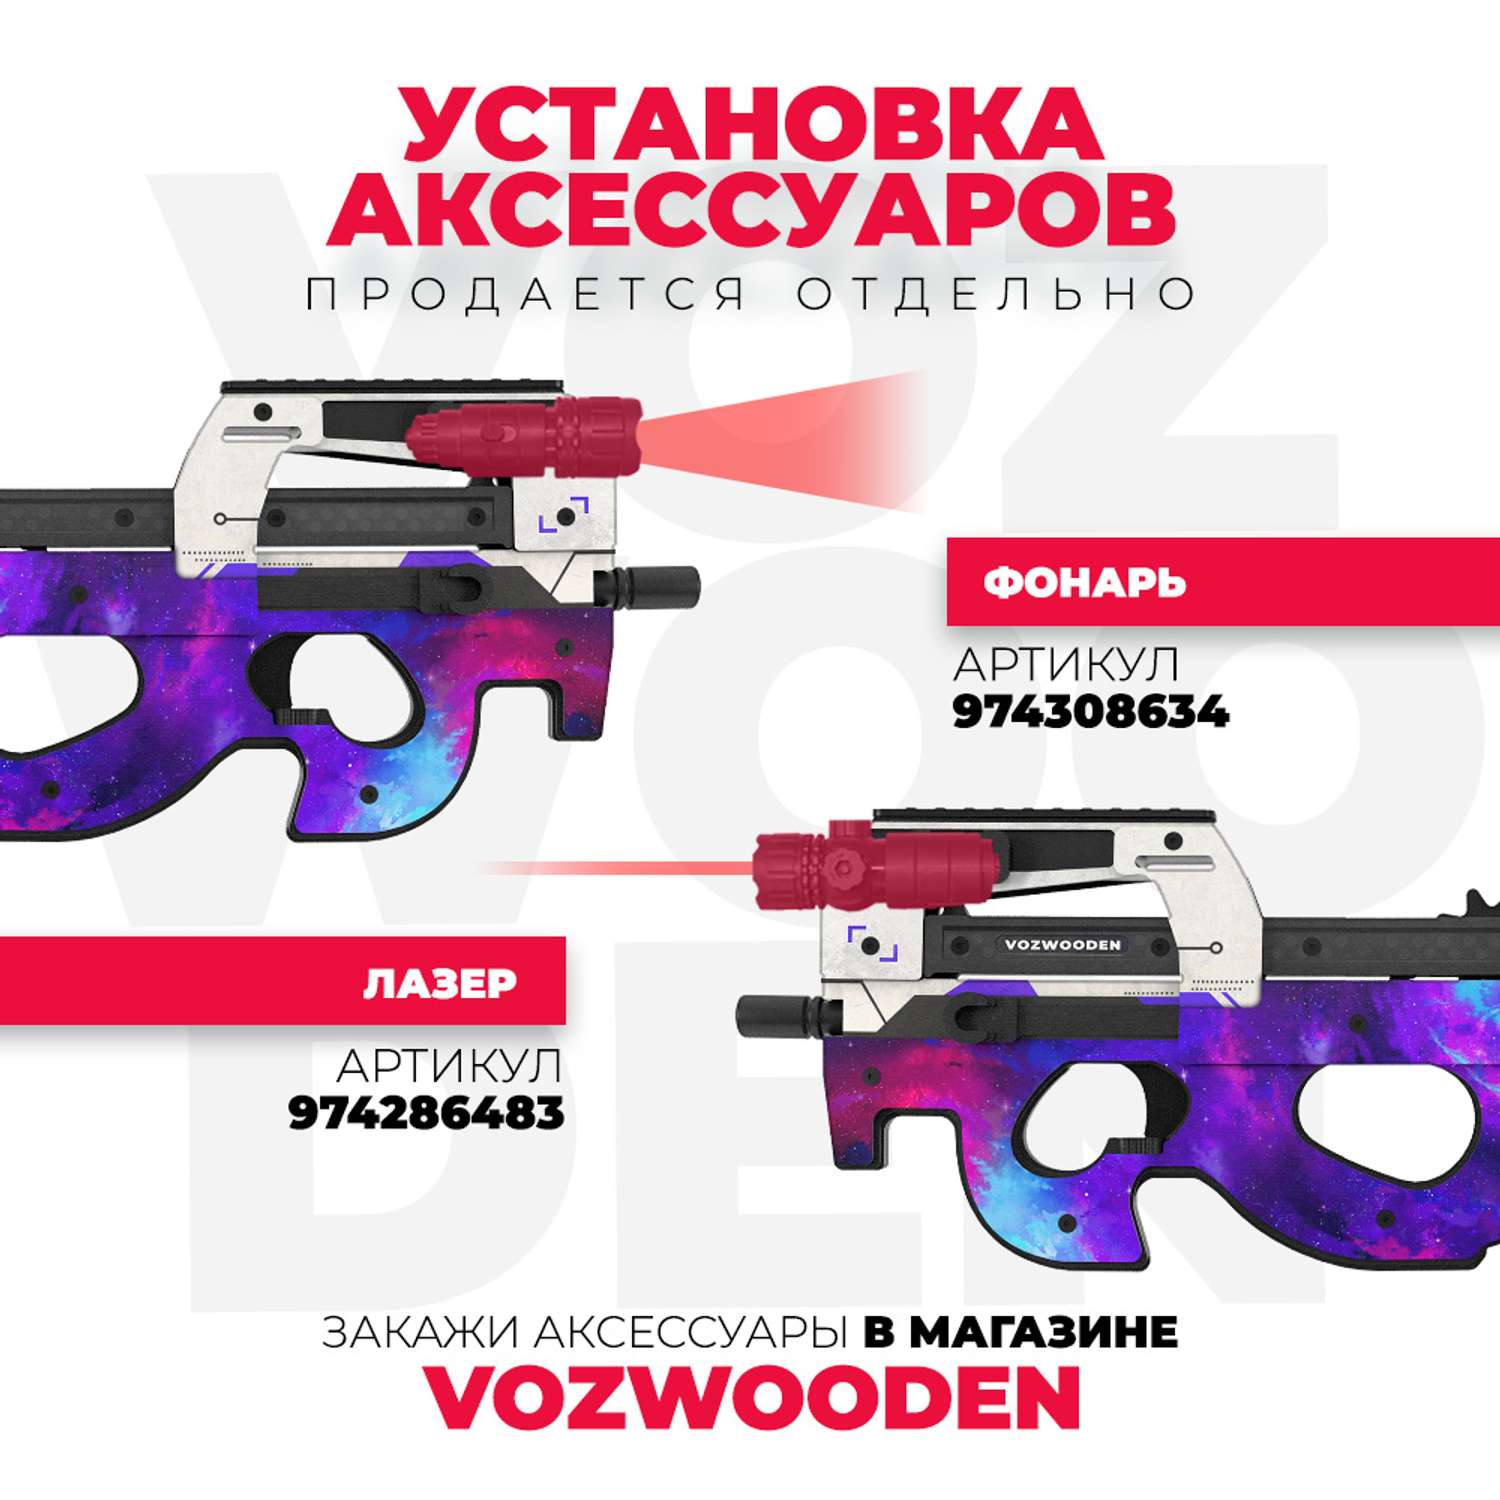 Деревянный пистолет-пулемет VozWooden P90 Небула Standoff 2 - фото 5